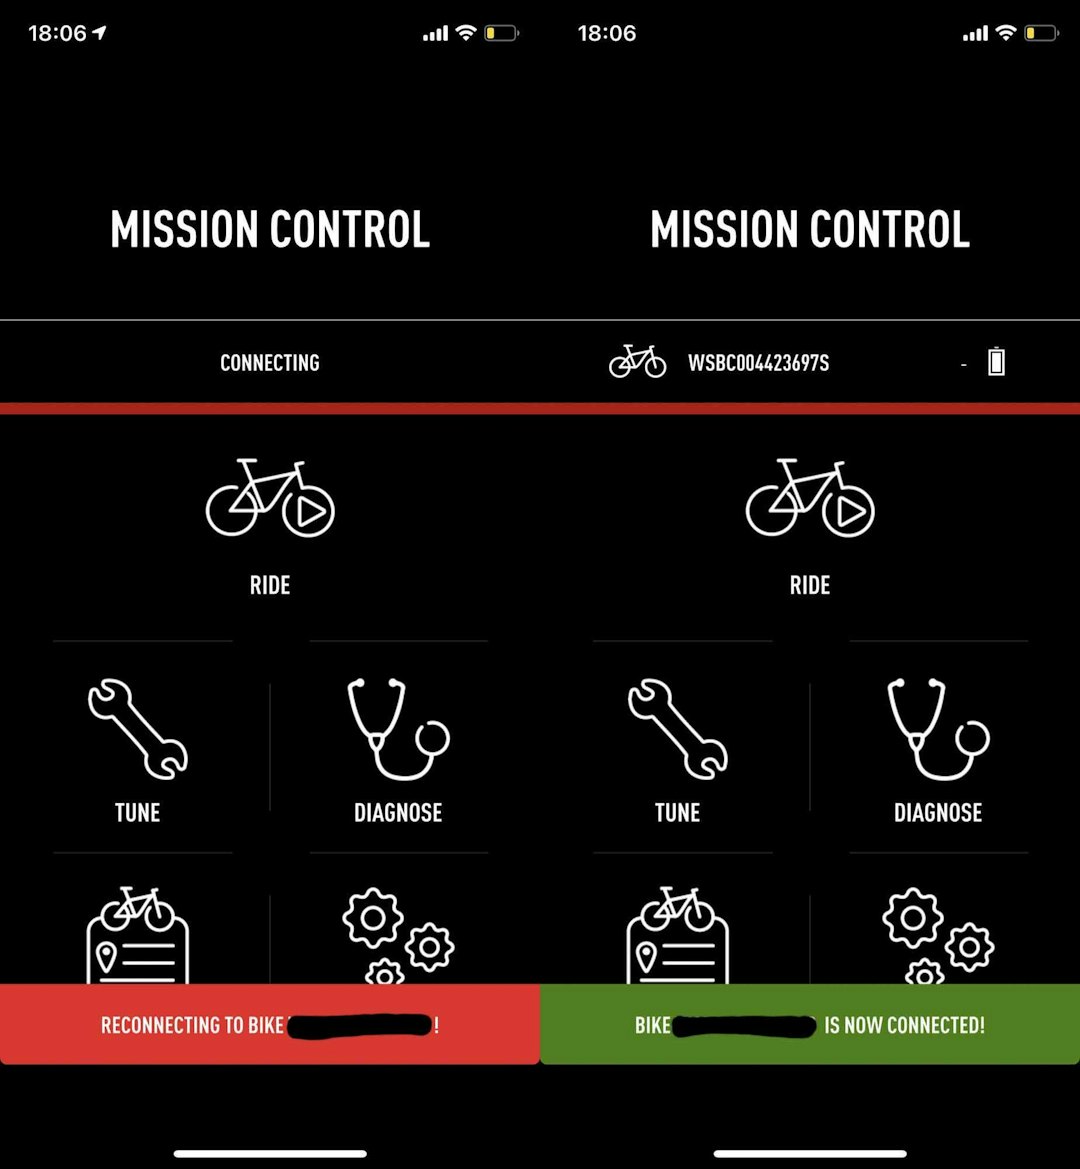 elsykkel specialized mission control app